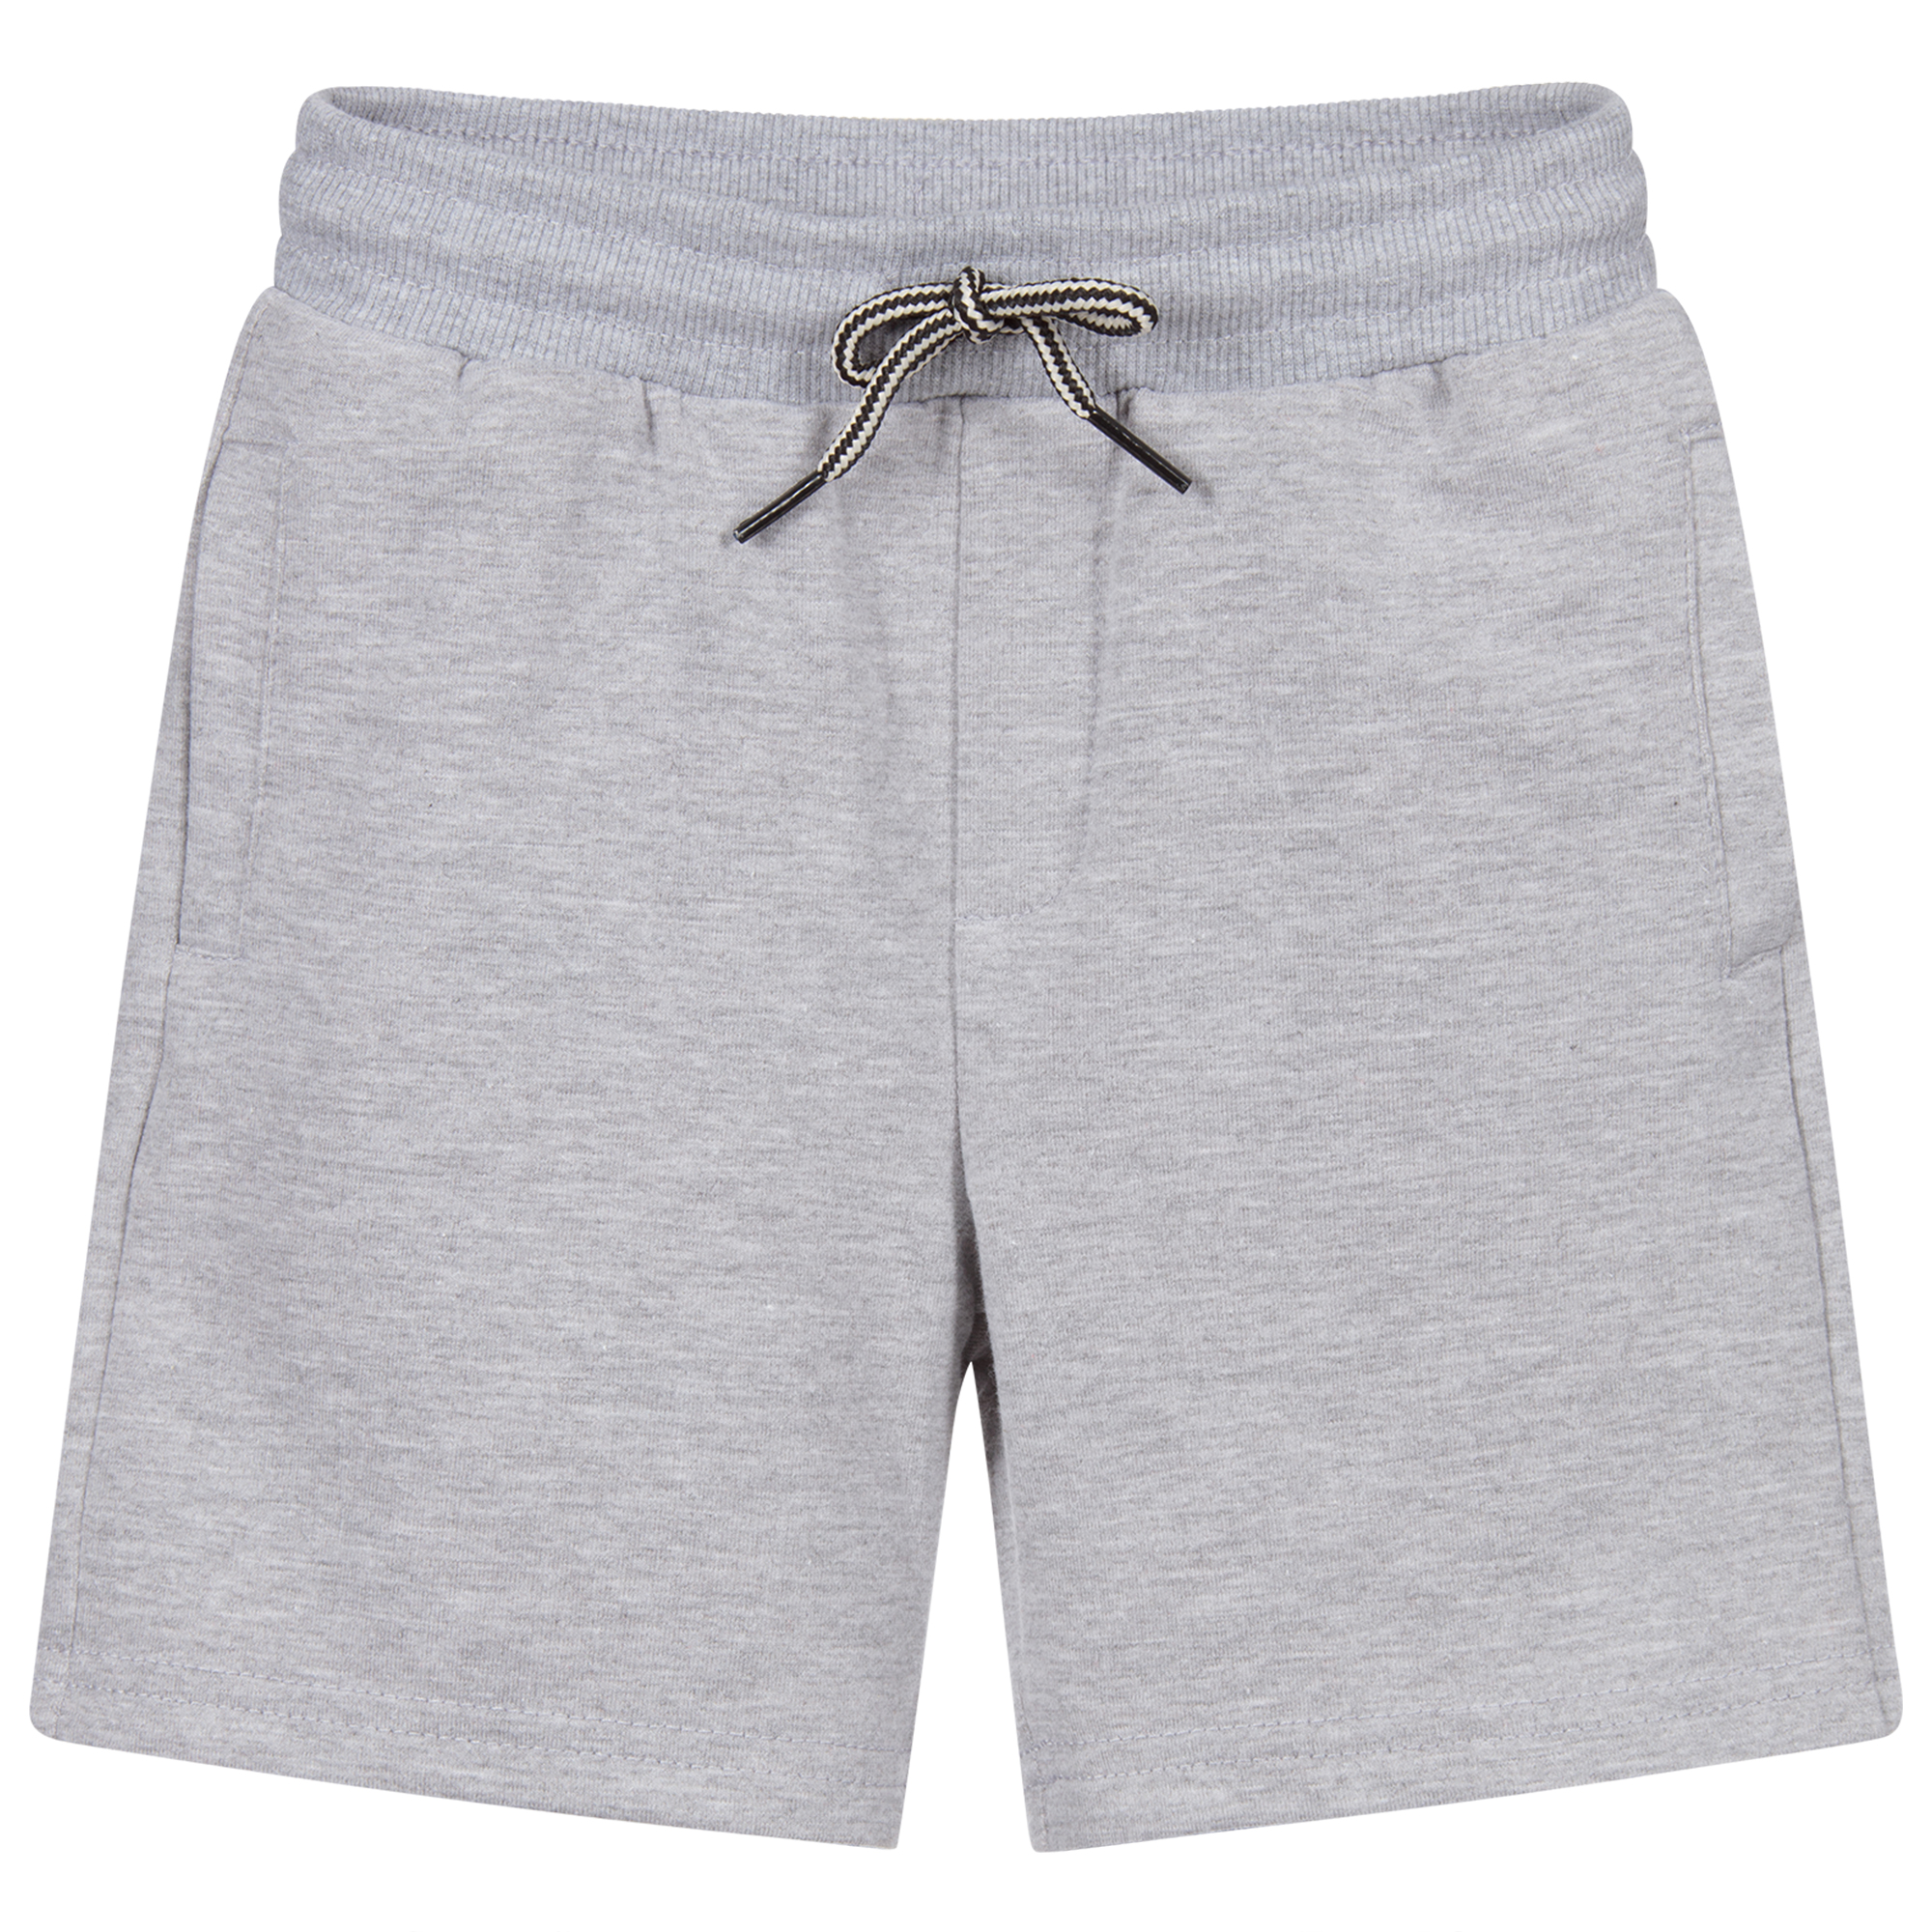  Grey Shorts